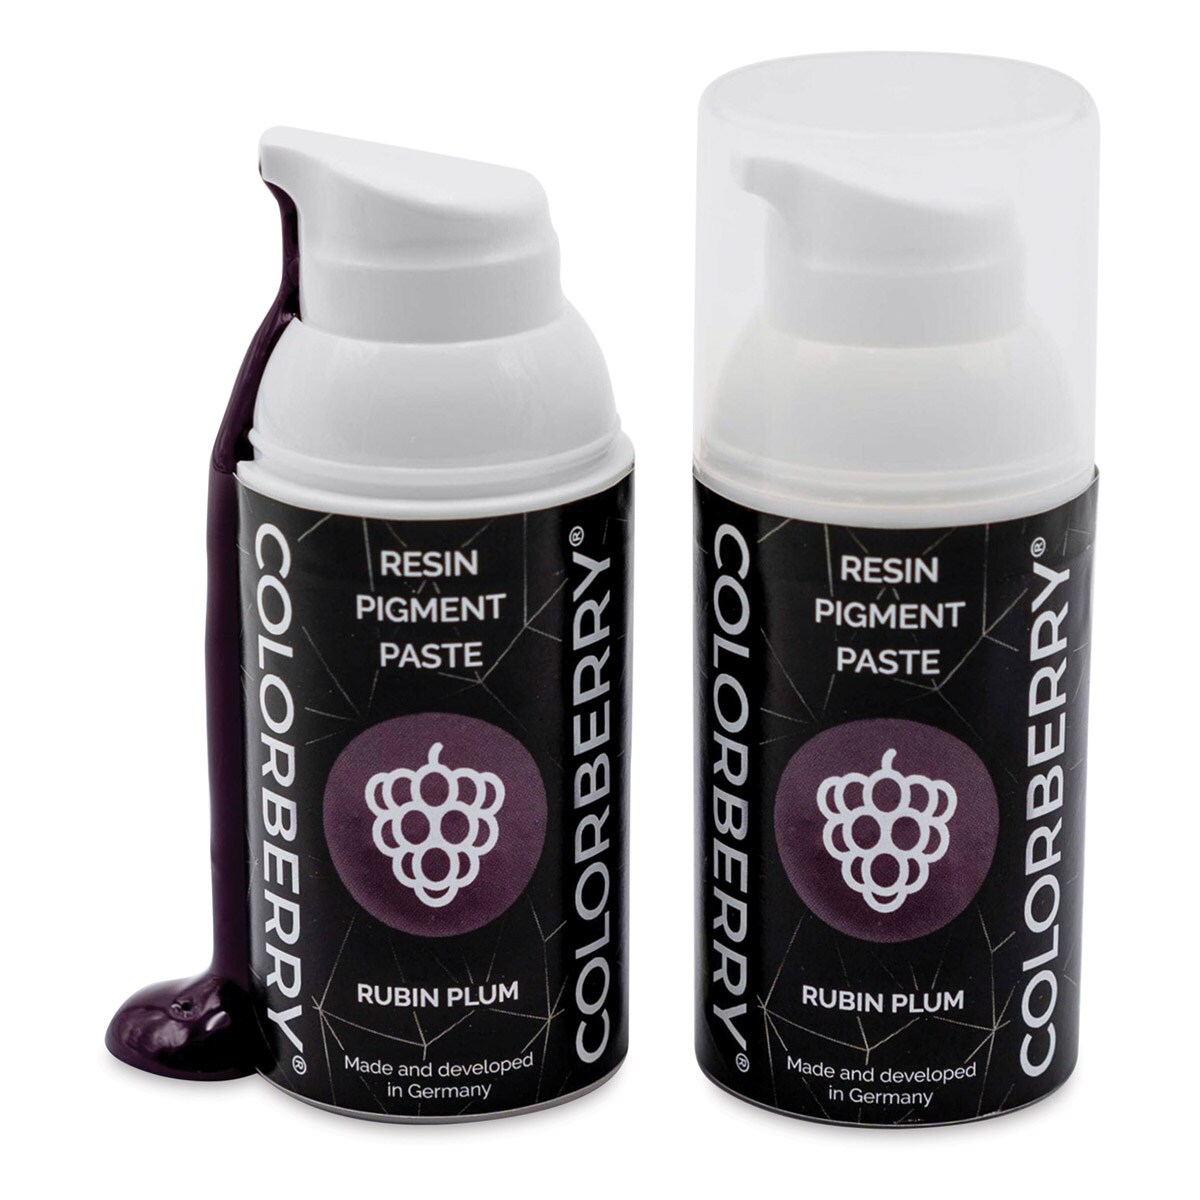 Colorberry Resin Pigment Paste - Rubin Plum, 30 ml, Bottle